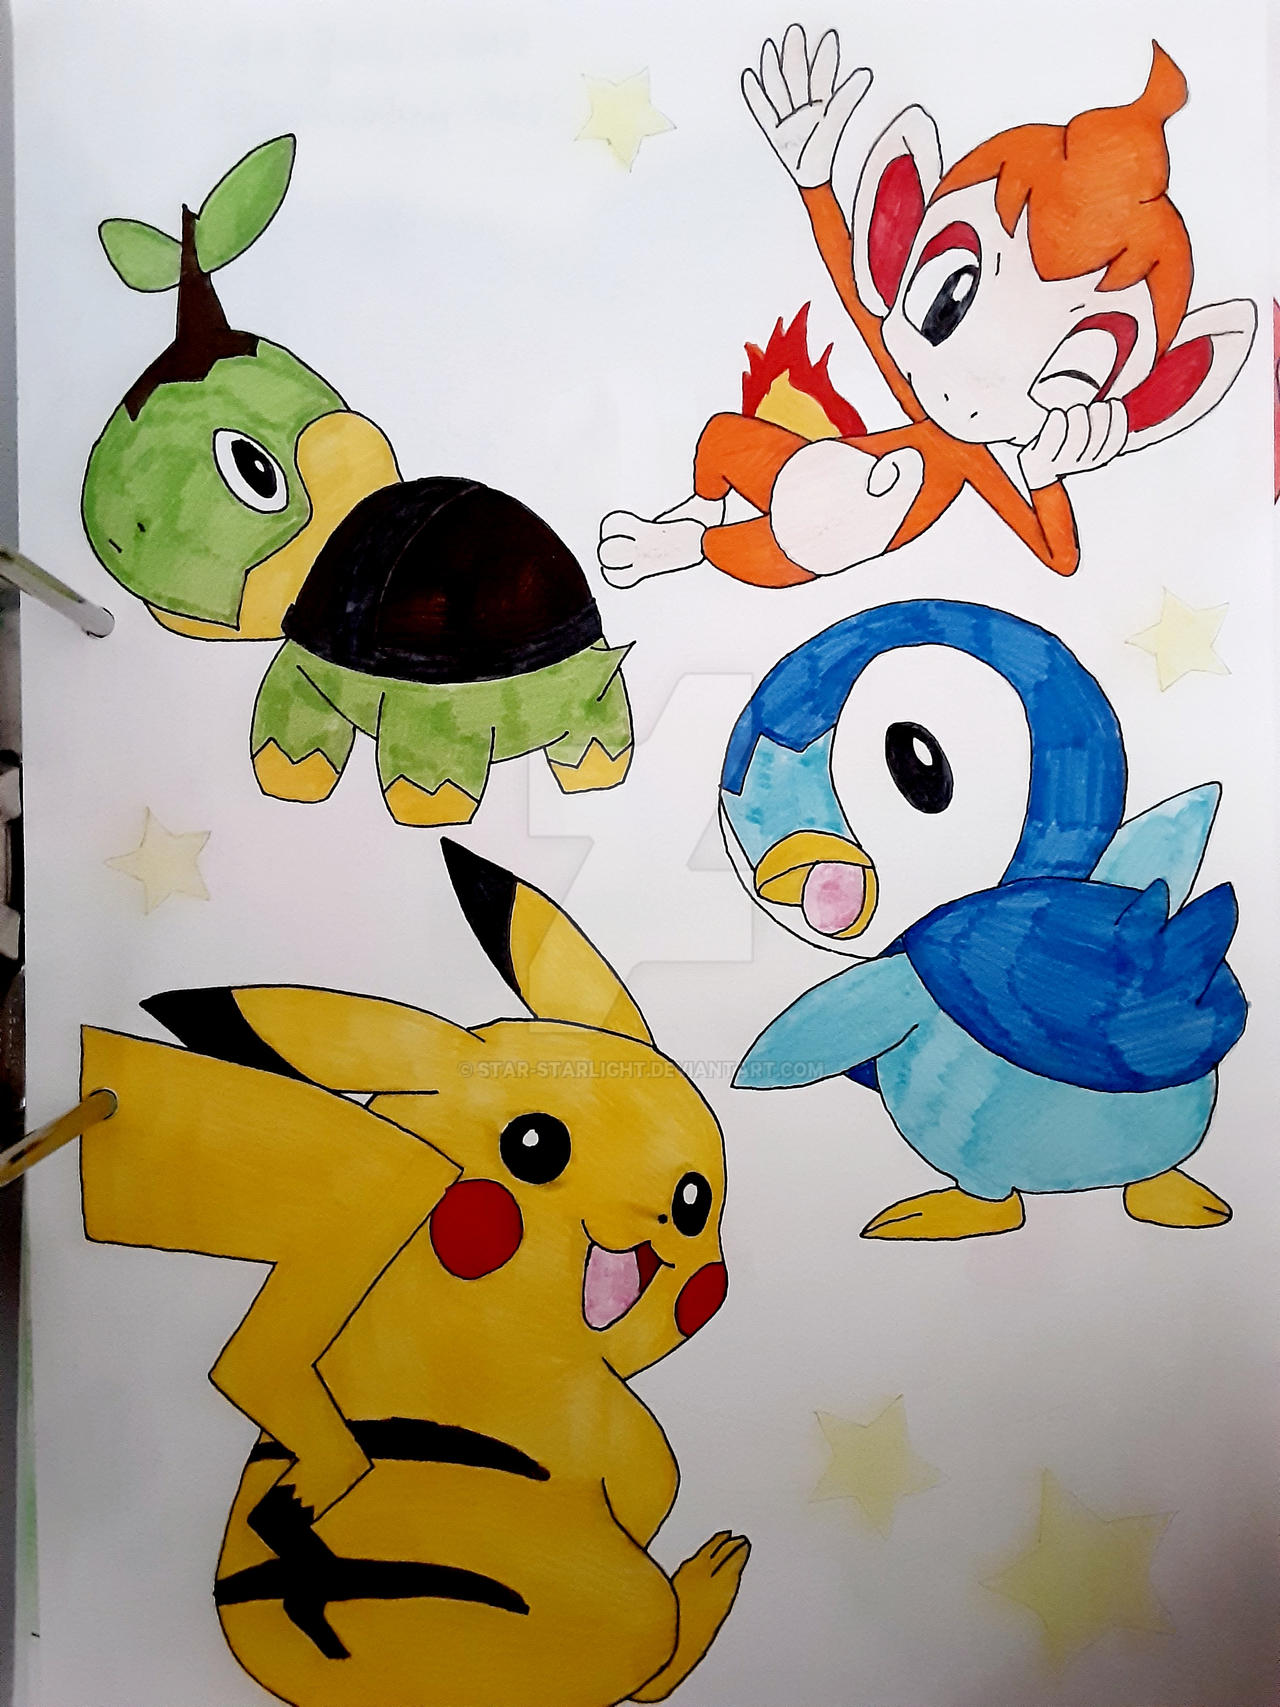 Imagem: Pikachu ninja (com imagens), Animes br, Anime, Pokemon